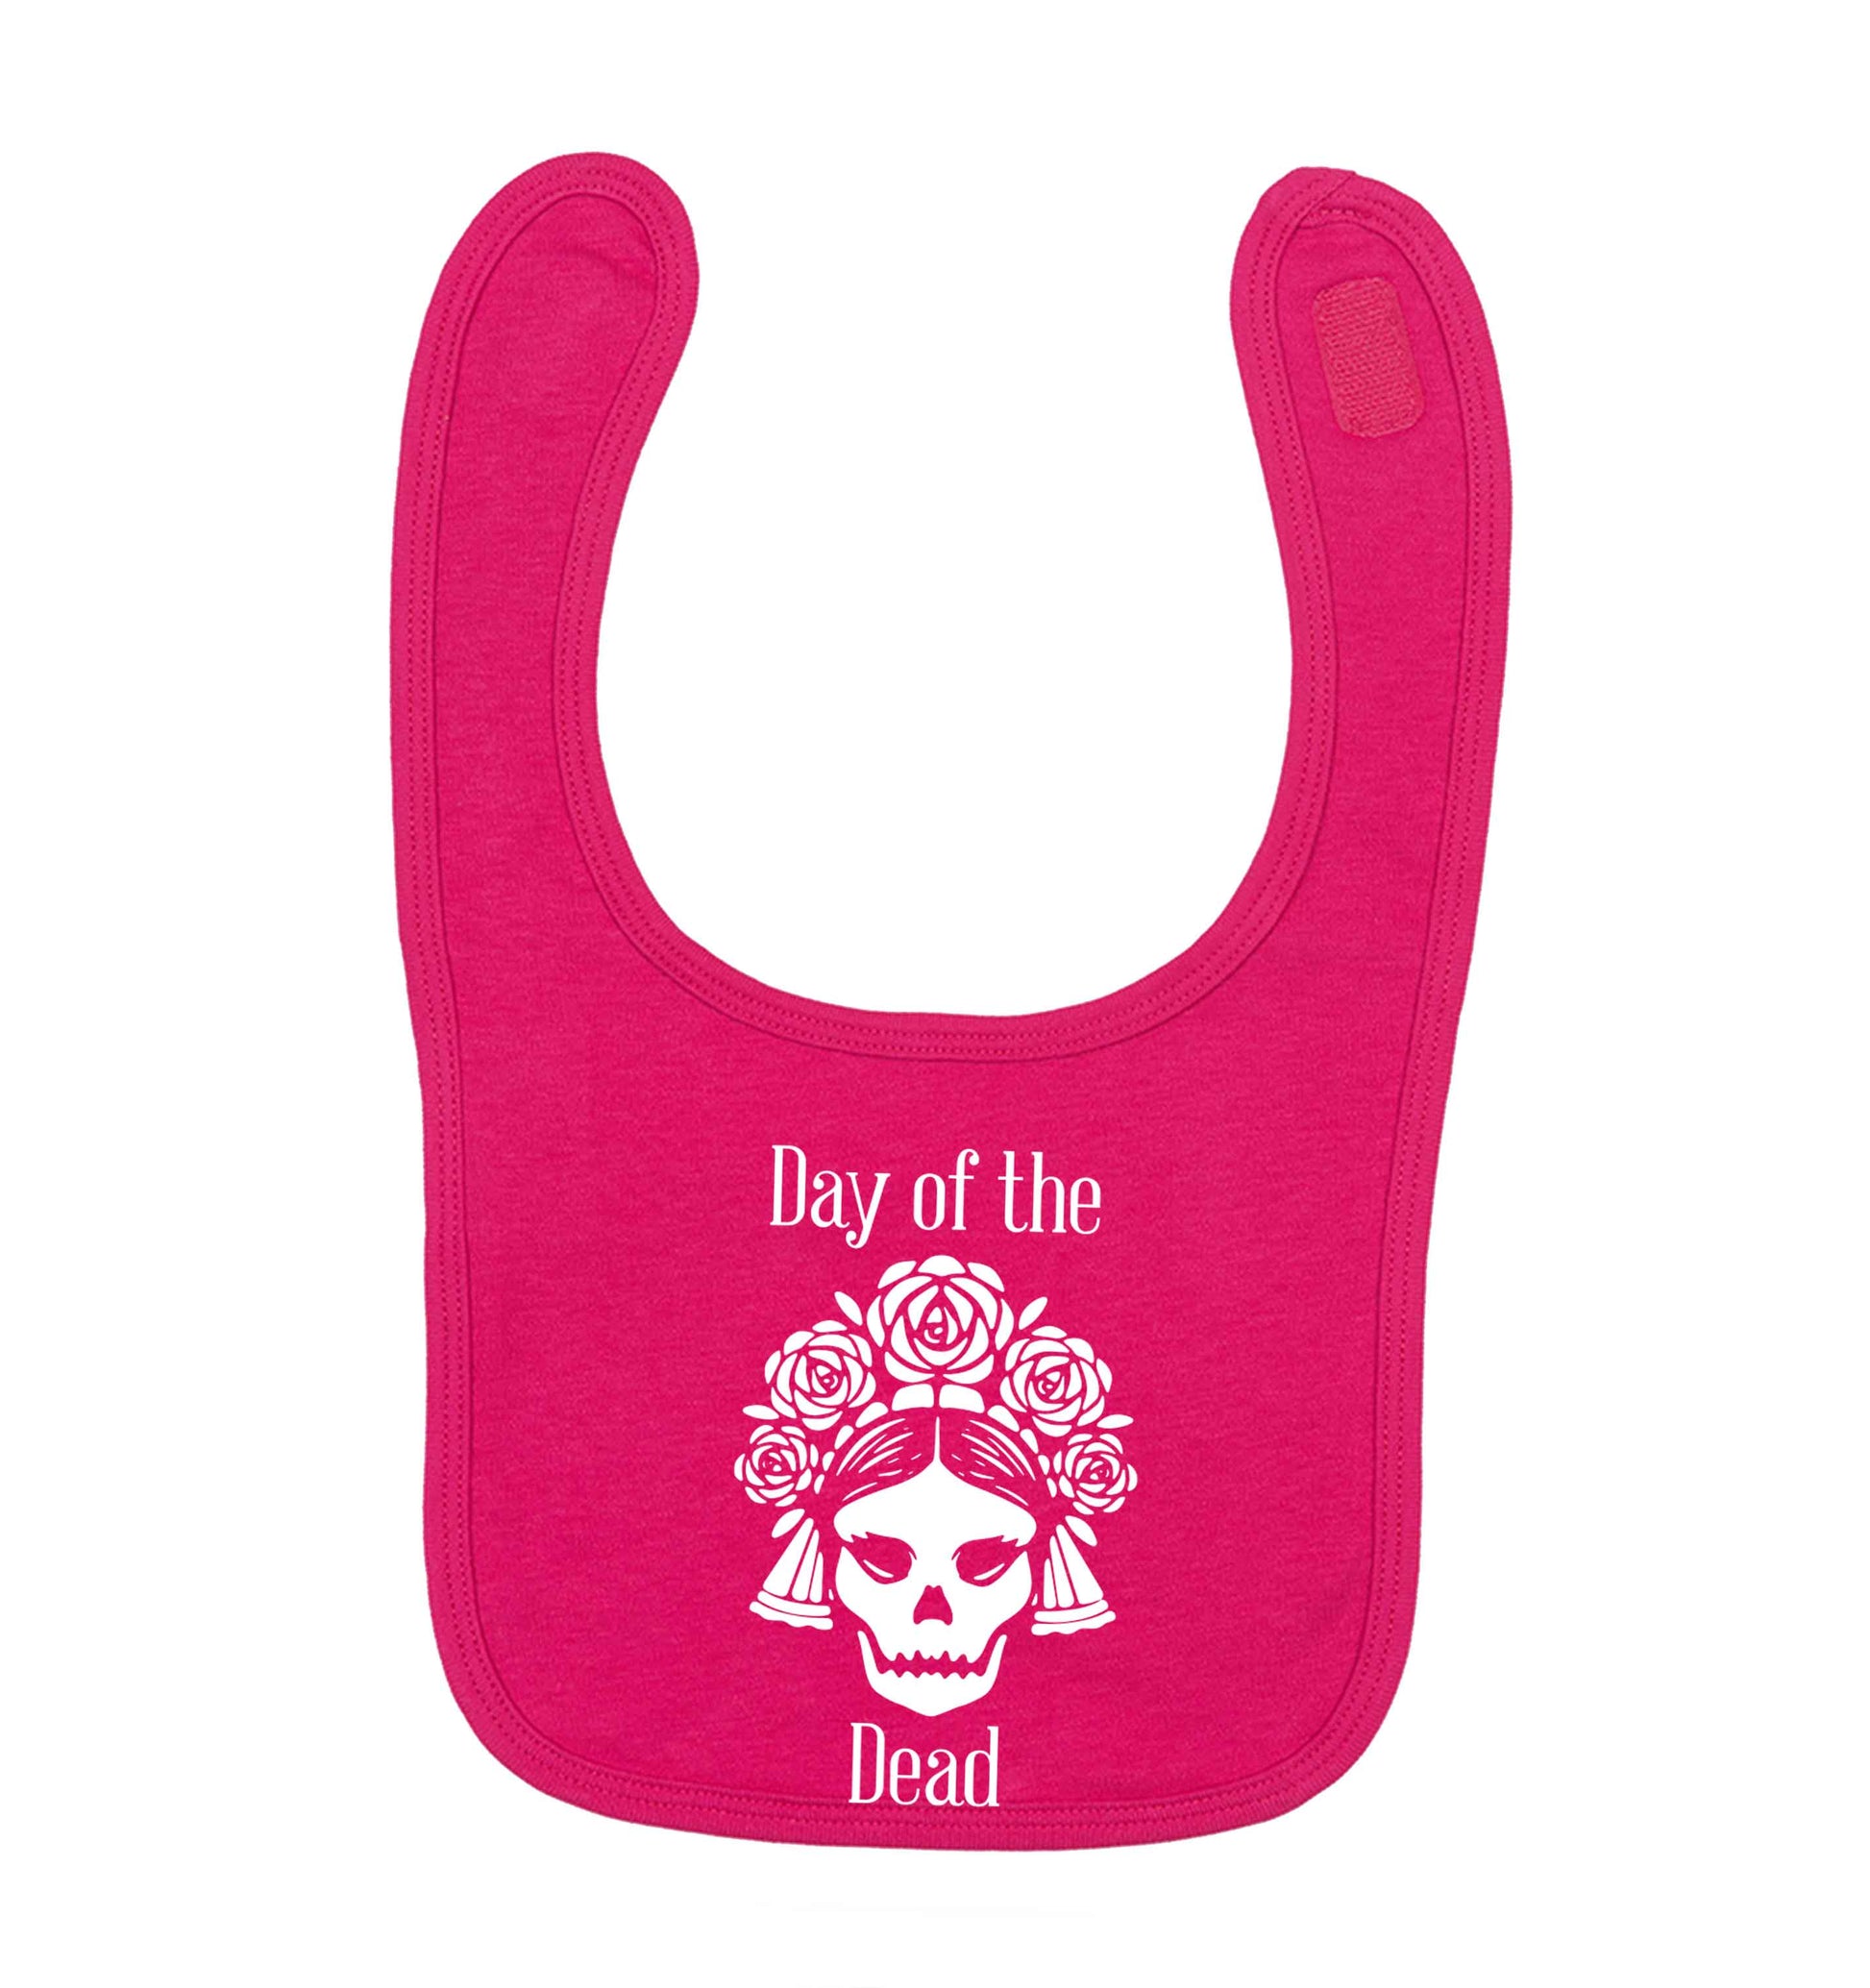 Day of the dead dark pink baby bib